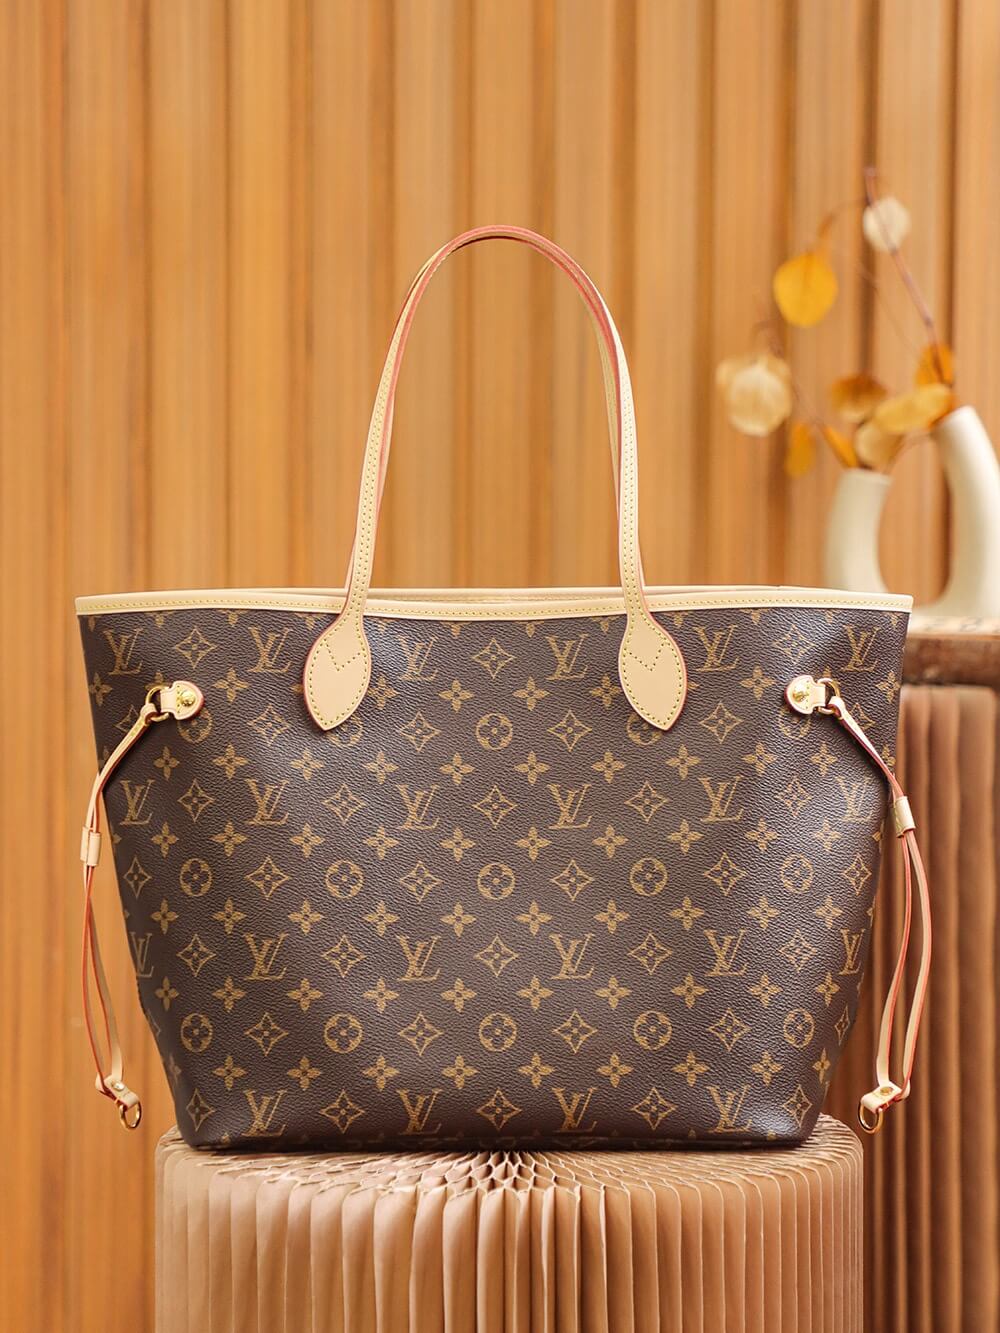 Trade of fake Louis Vuitton handbags under threat in Dubai  Al Arabiya  English